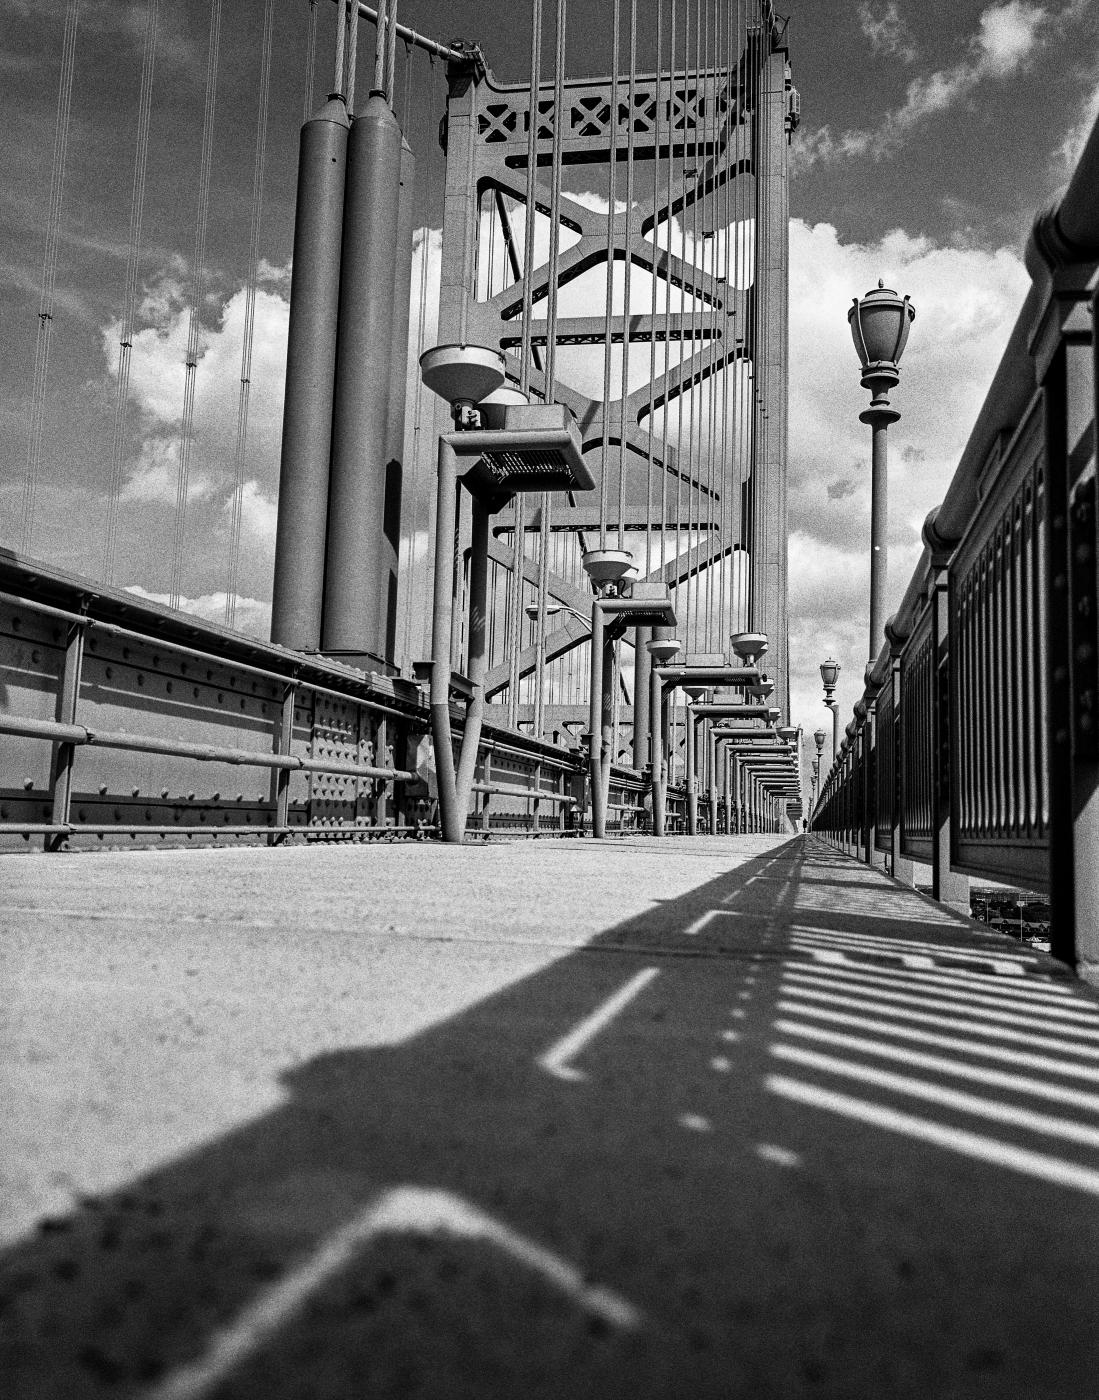 Benjamin Franklin Bridge 140819210 | Buy this image